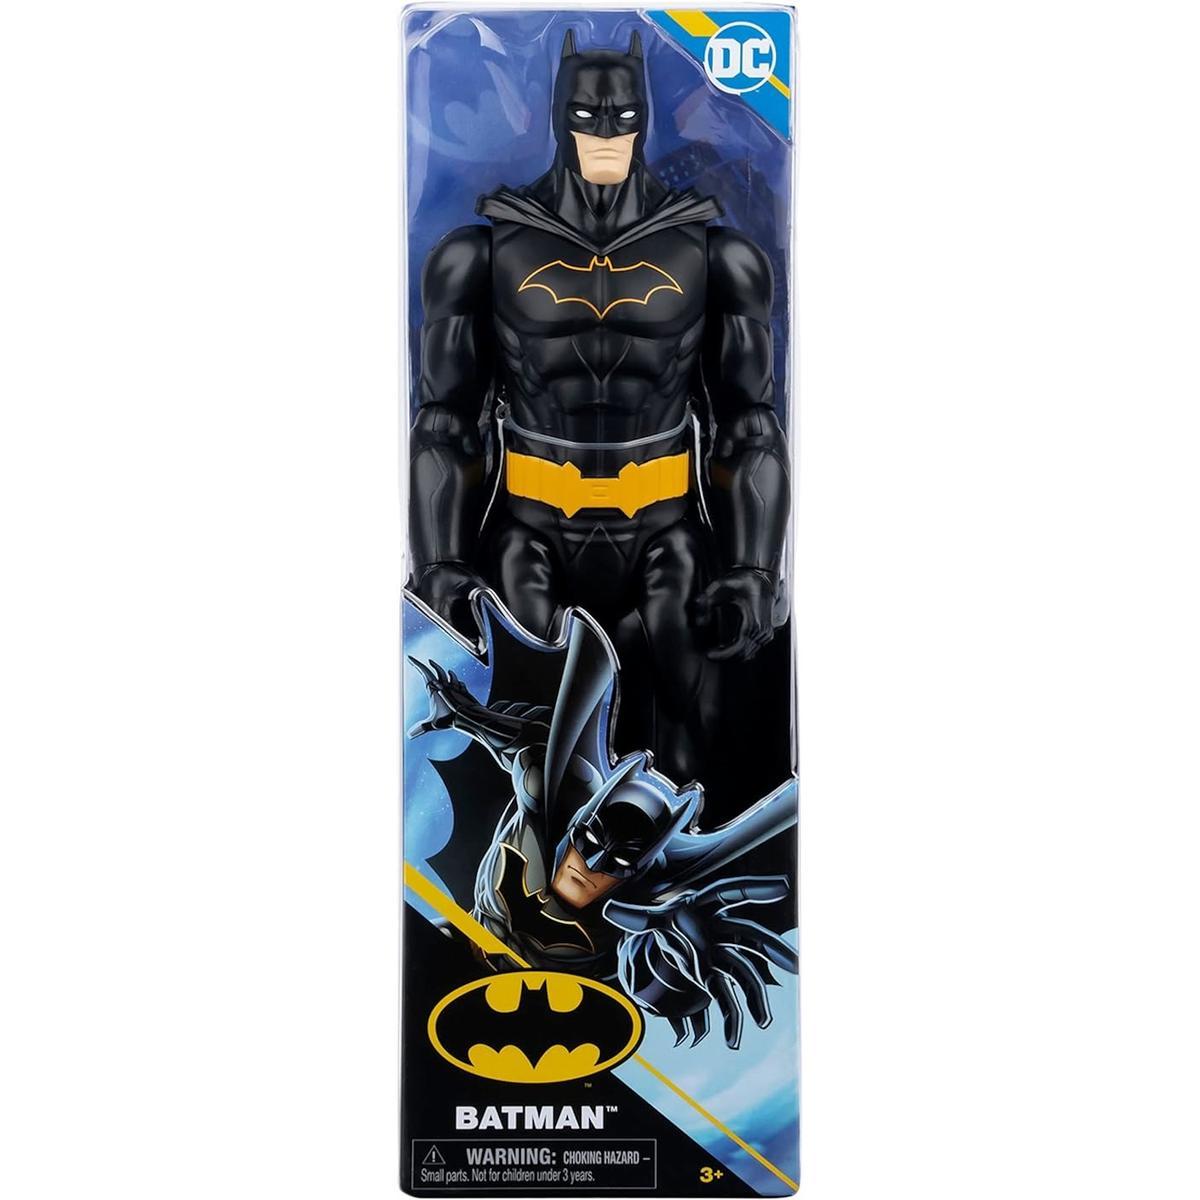 BATMAN DC COMICS ORYGINALNA RUCHOMA FIGURKA AKCJI BLACK CZARNY BATMAN 30cm 1 Full Screen